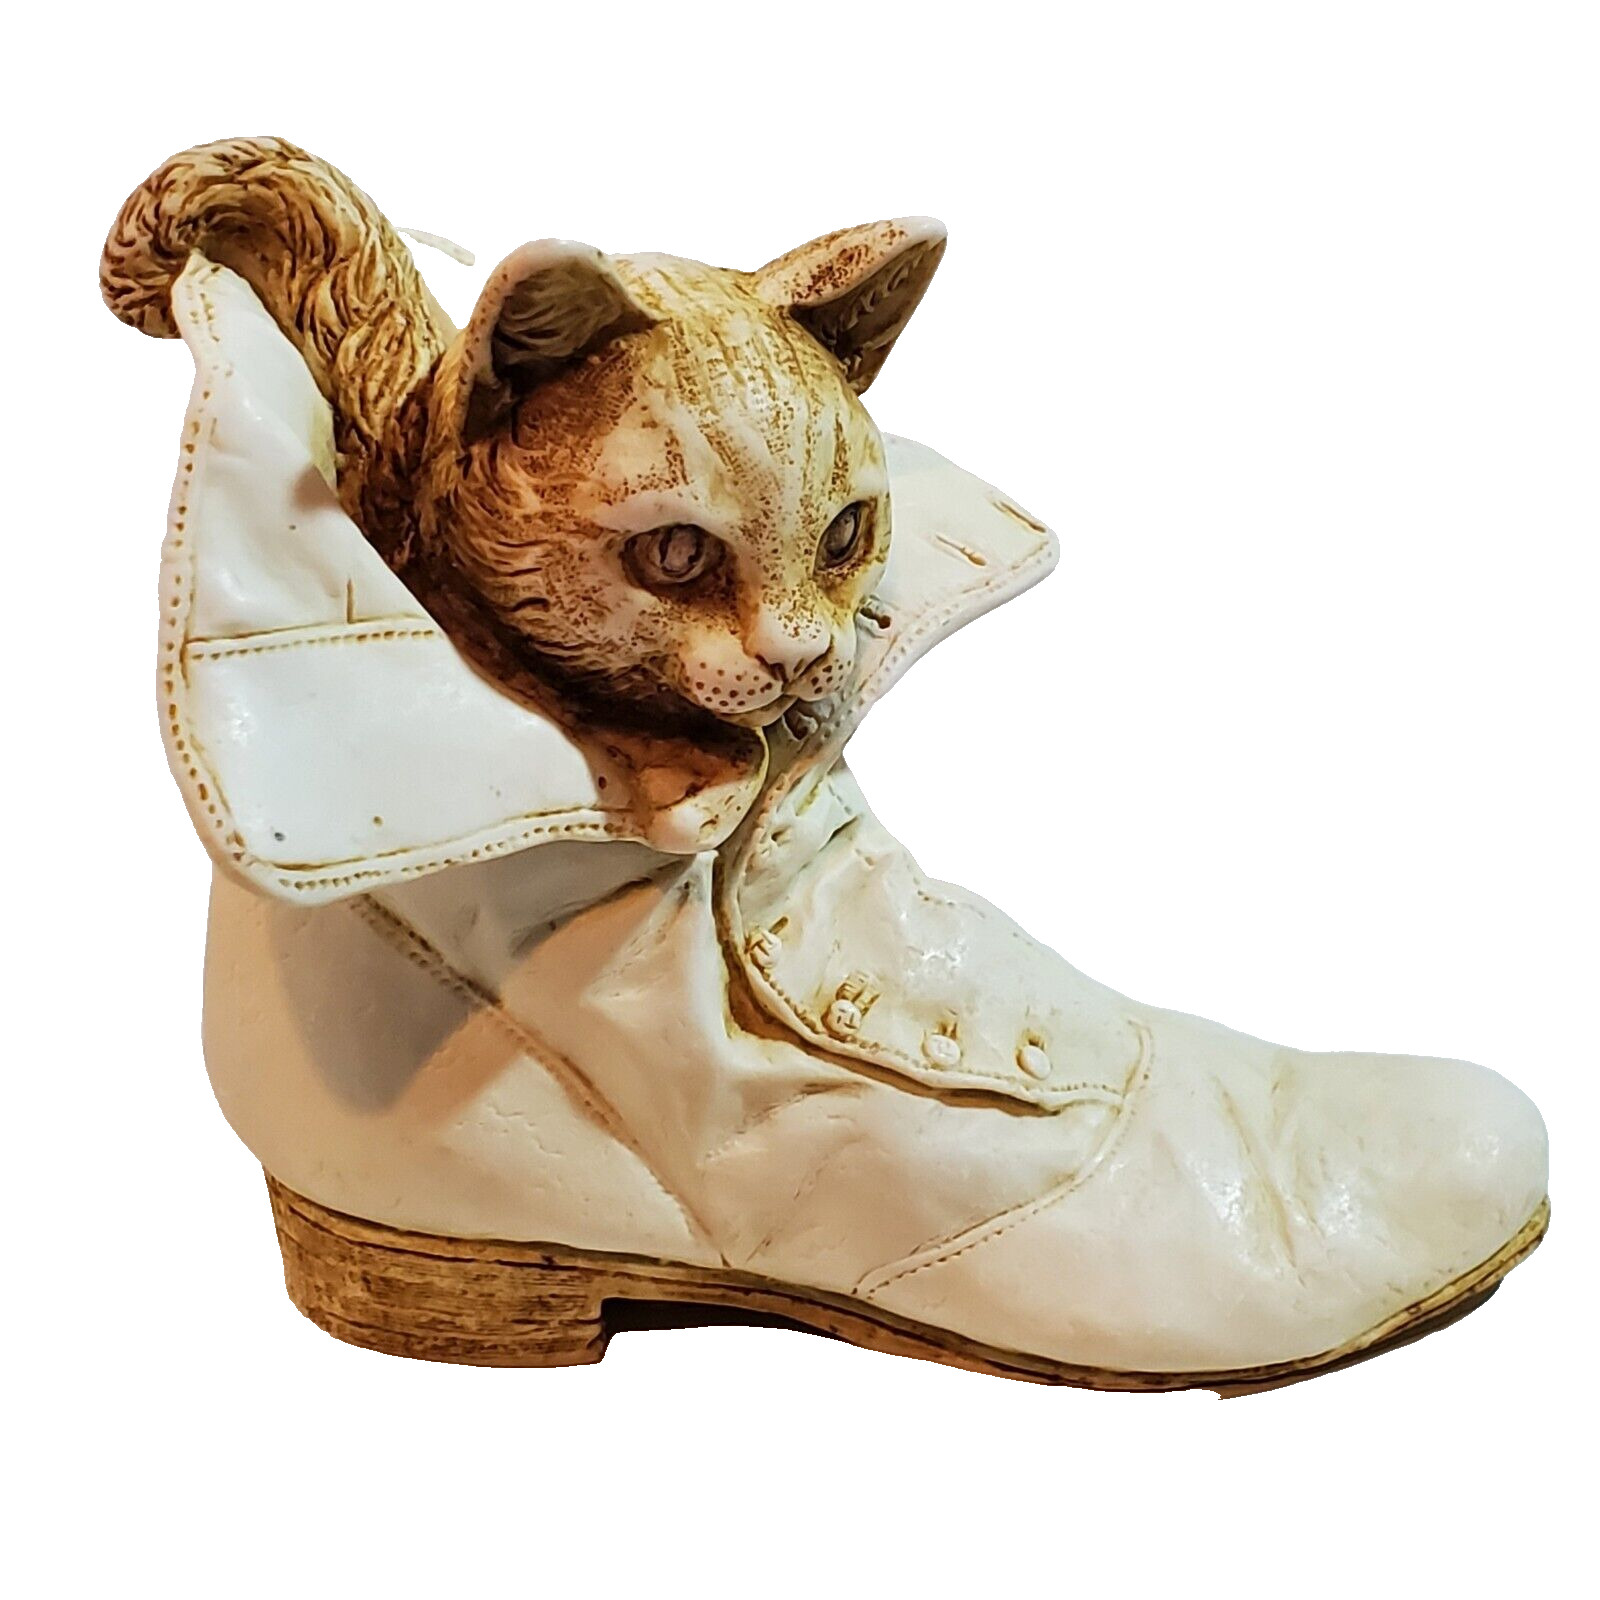 Vtg Harmony Kingdom Purrfect Fit Cat in Shoe Victorian Boot Trinket Box Figurine